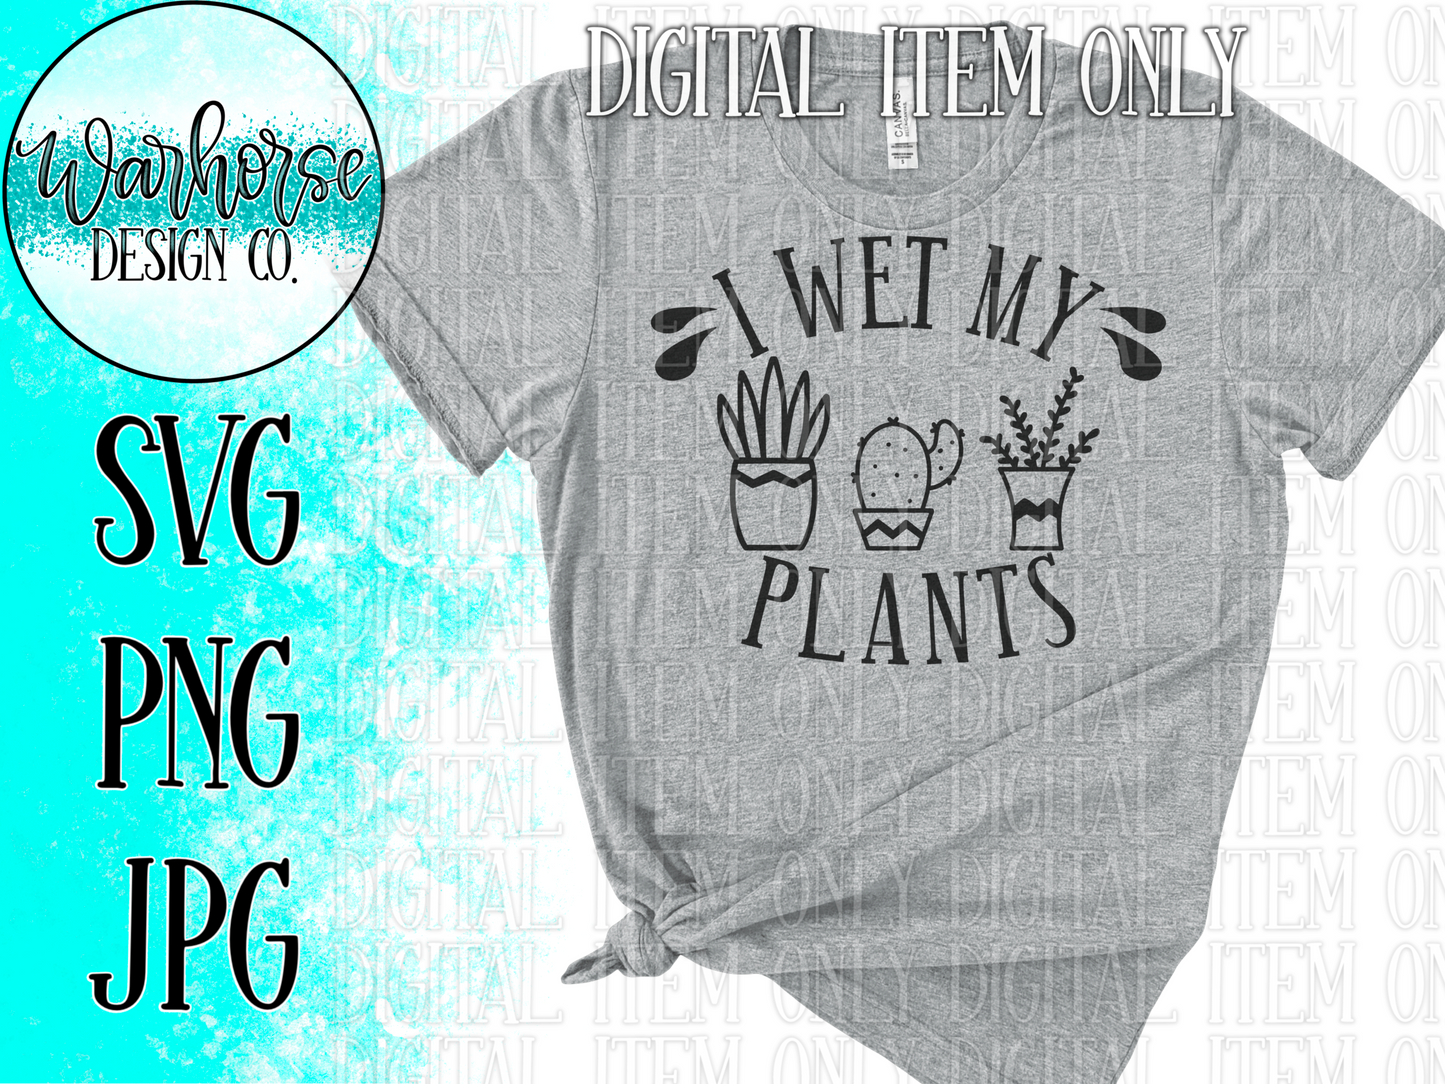 I wet my plants SVG PNG PDF